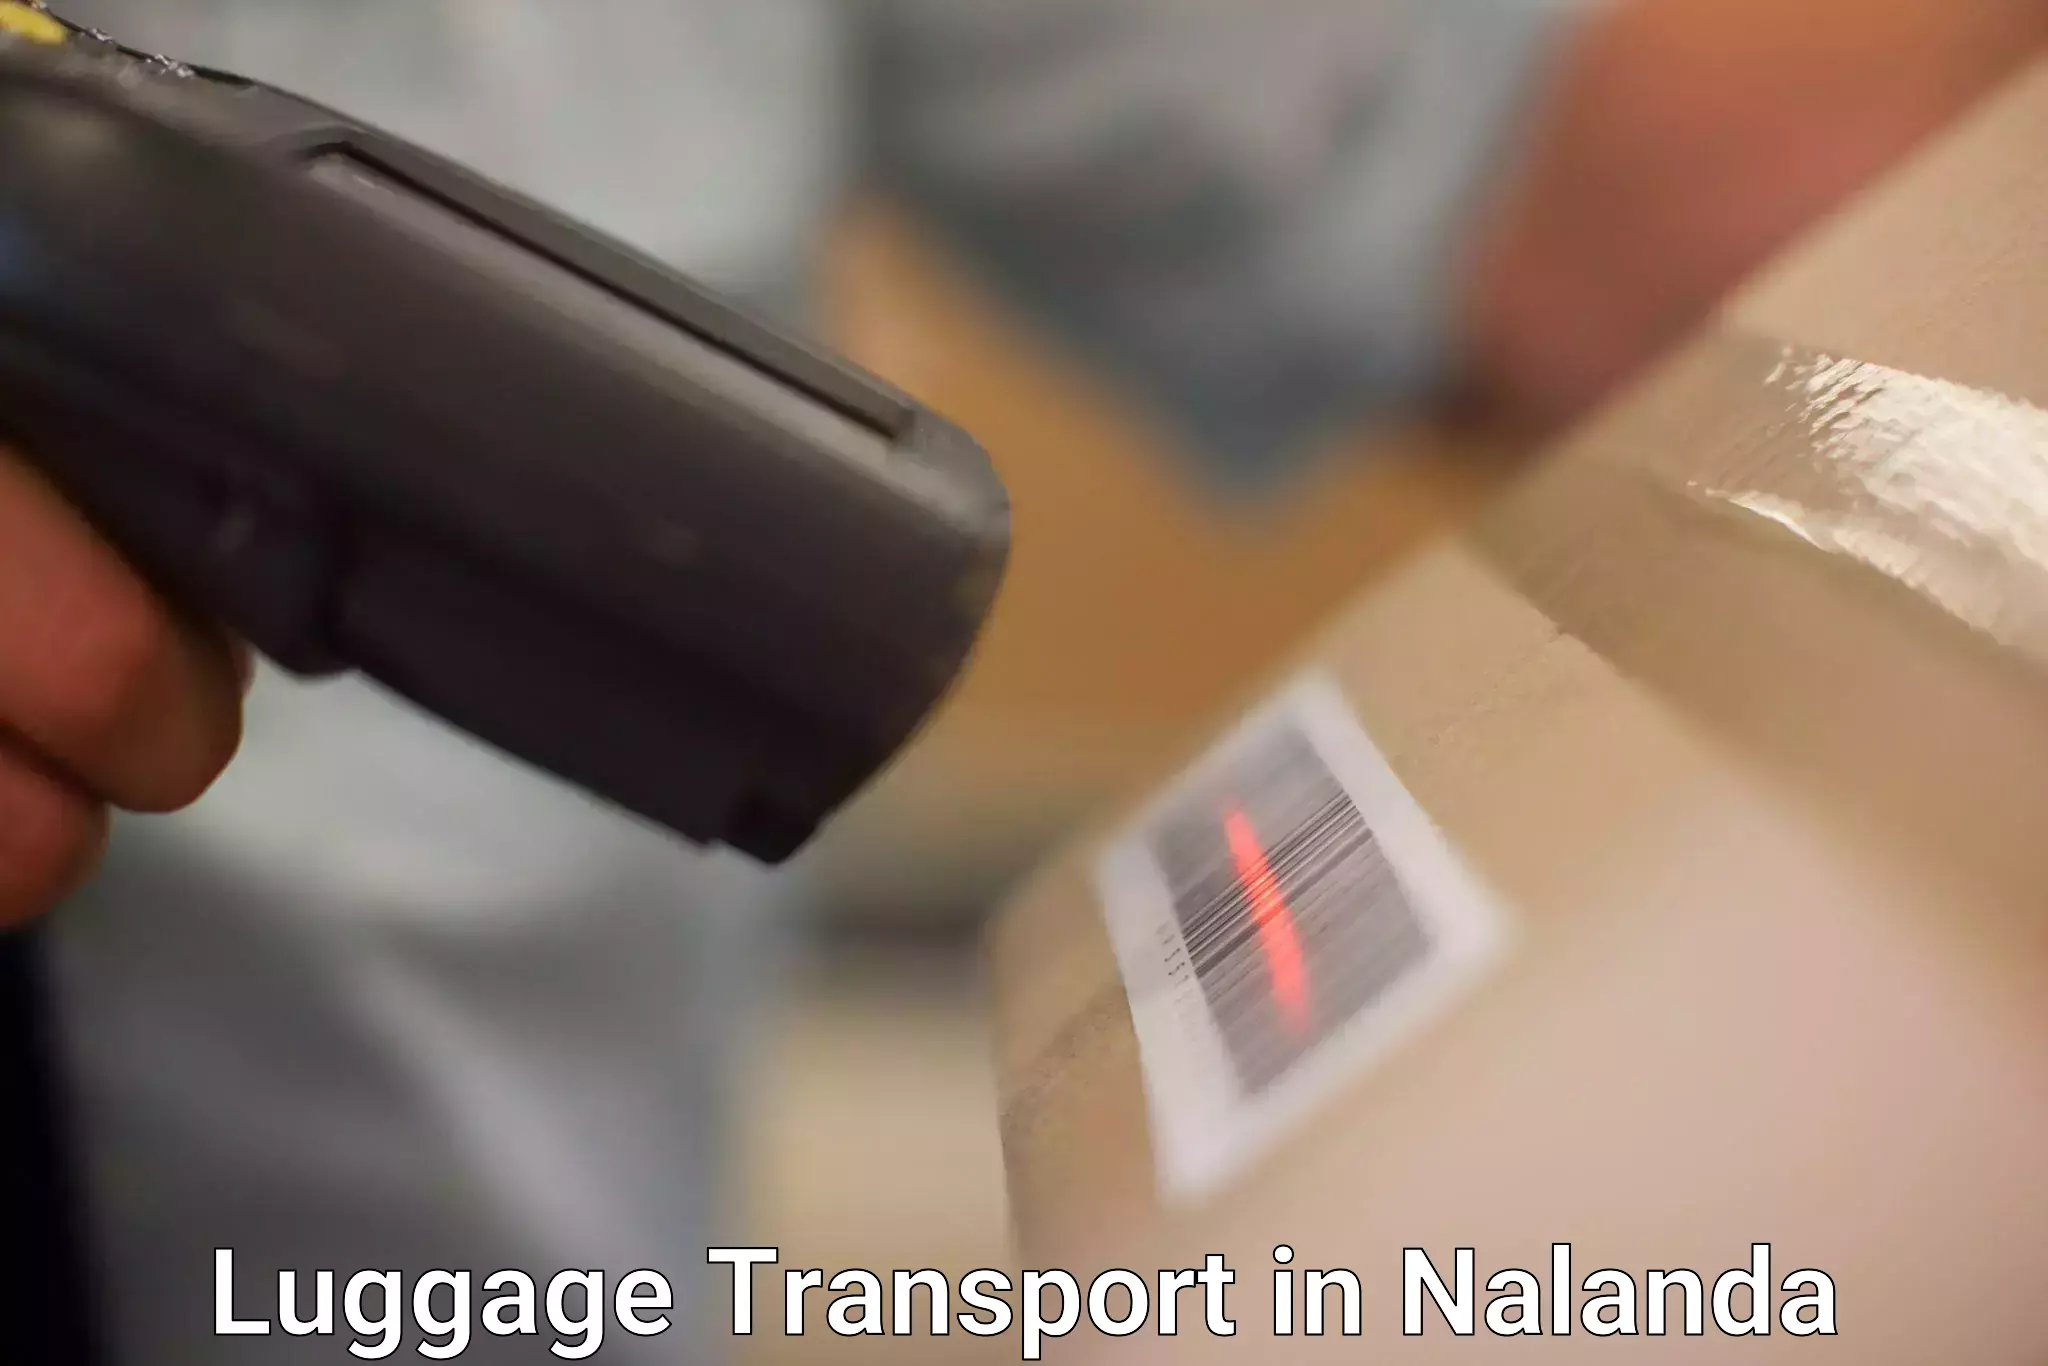 Luggage transit service in Nalanda